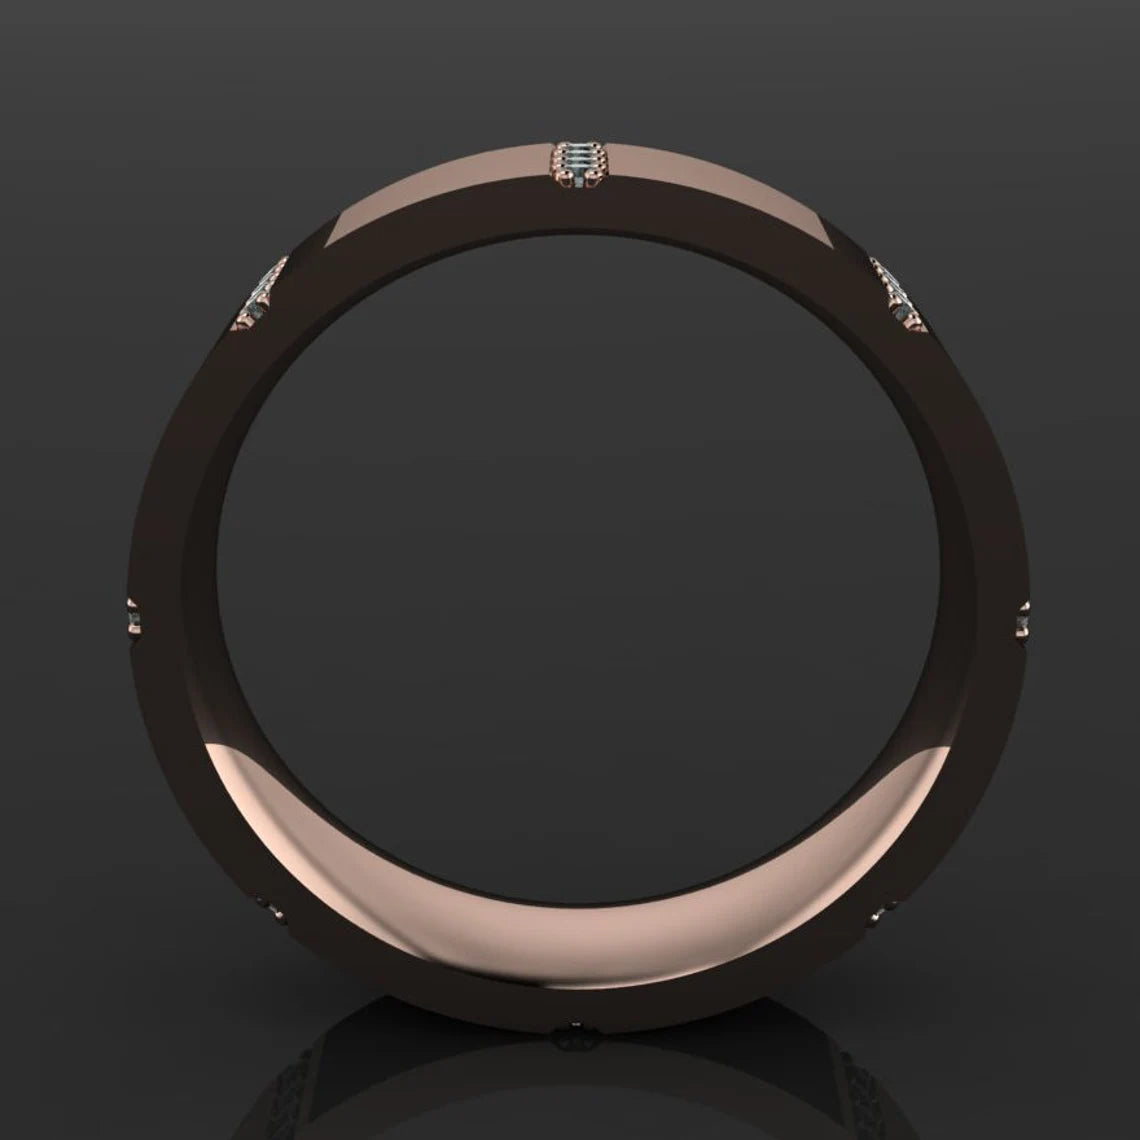 axel ring - men's gold and moissanite wedding band, black moissanite ring - J Hollywood Designs